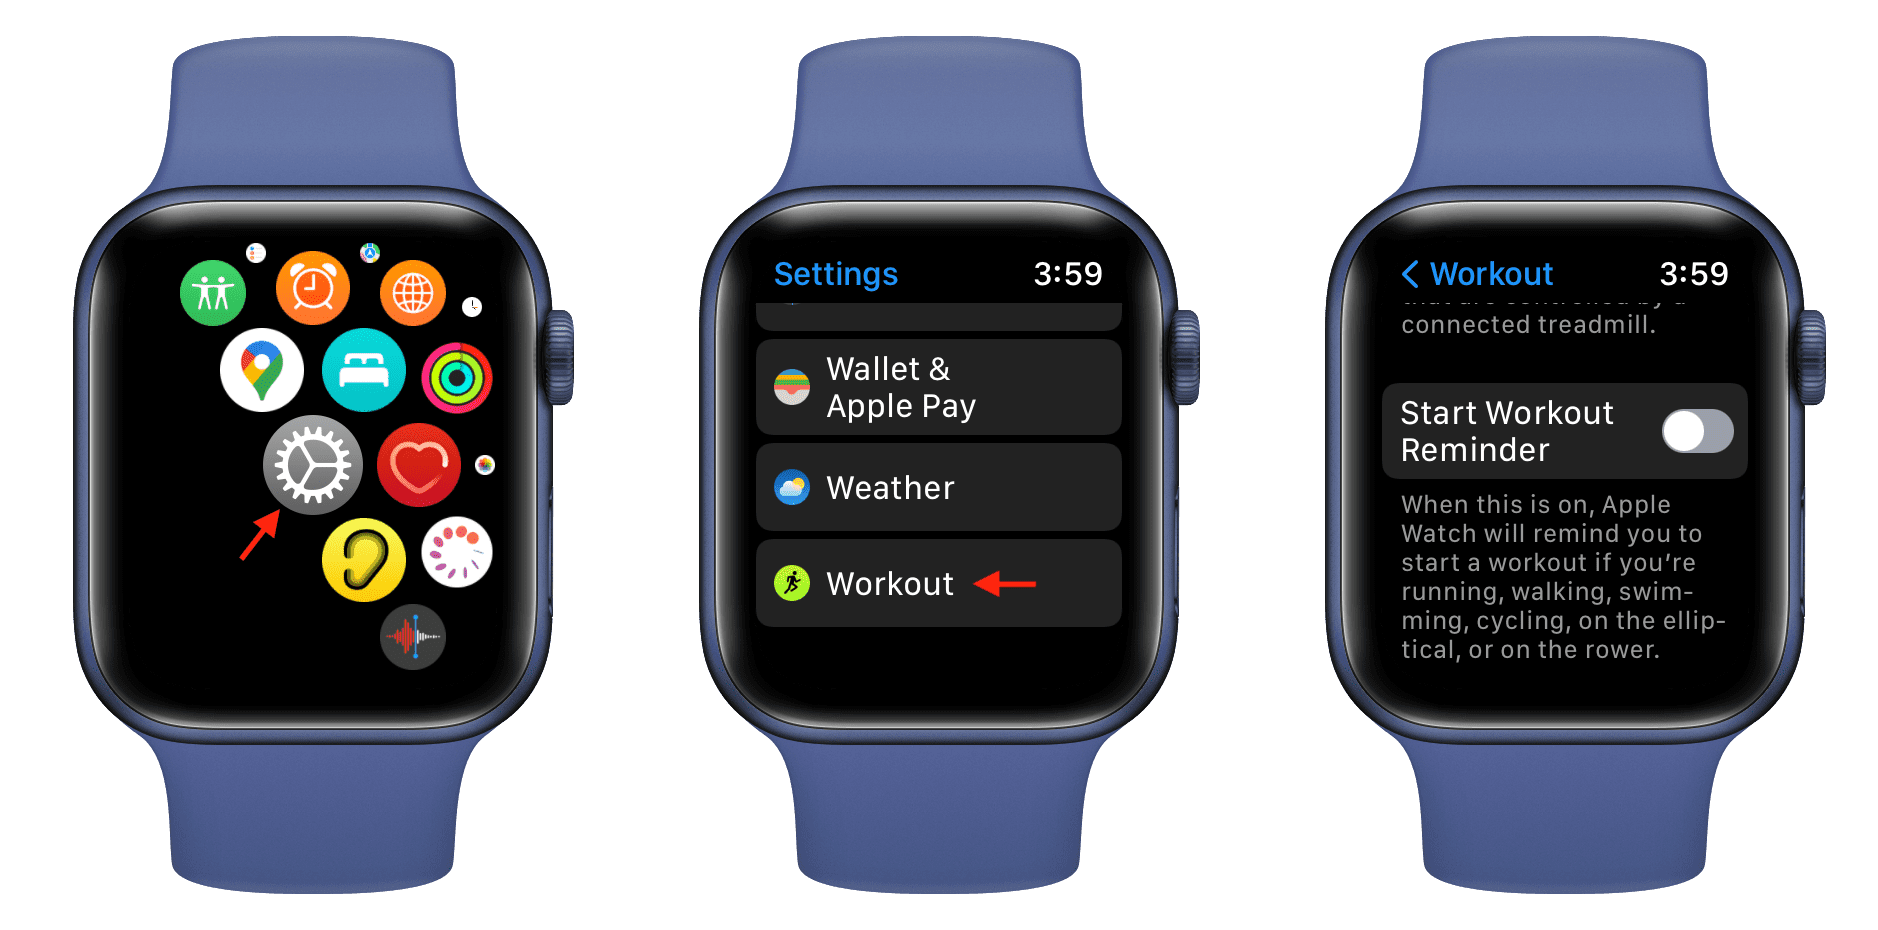 Turn off Start Workout Reminder on Apple Watch